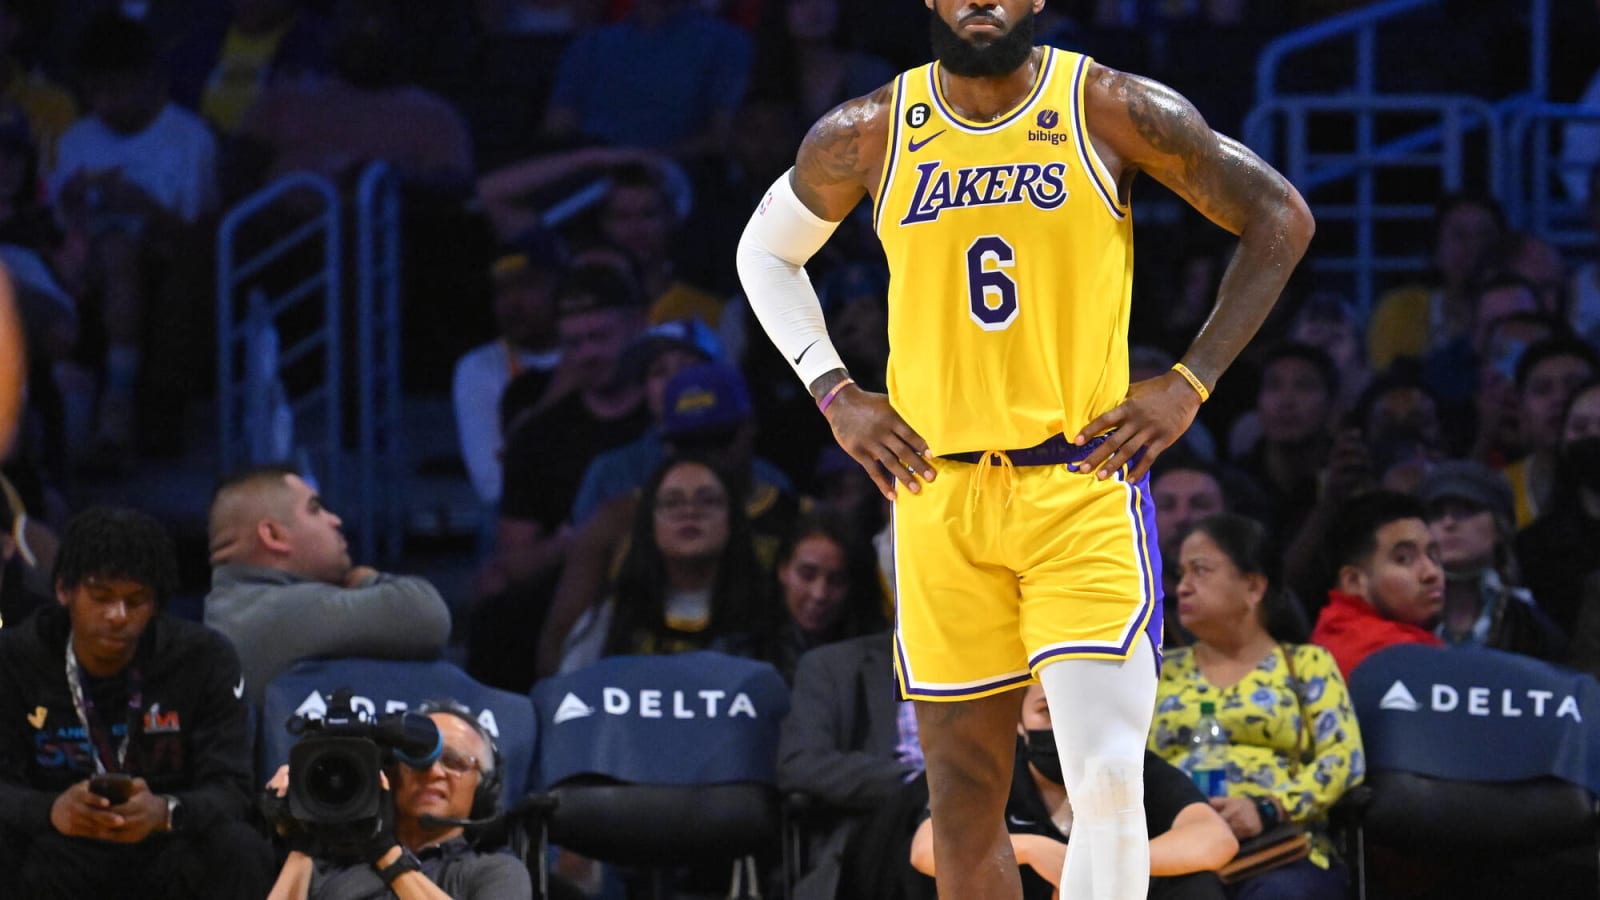 The Lakers' LeBron James is redefining NBA longevity as he reaches his 21st  season - The San Diego Union-Tribune